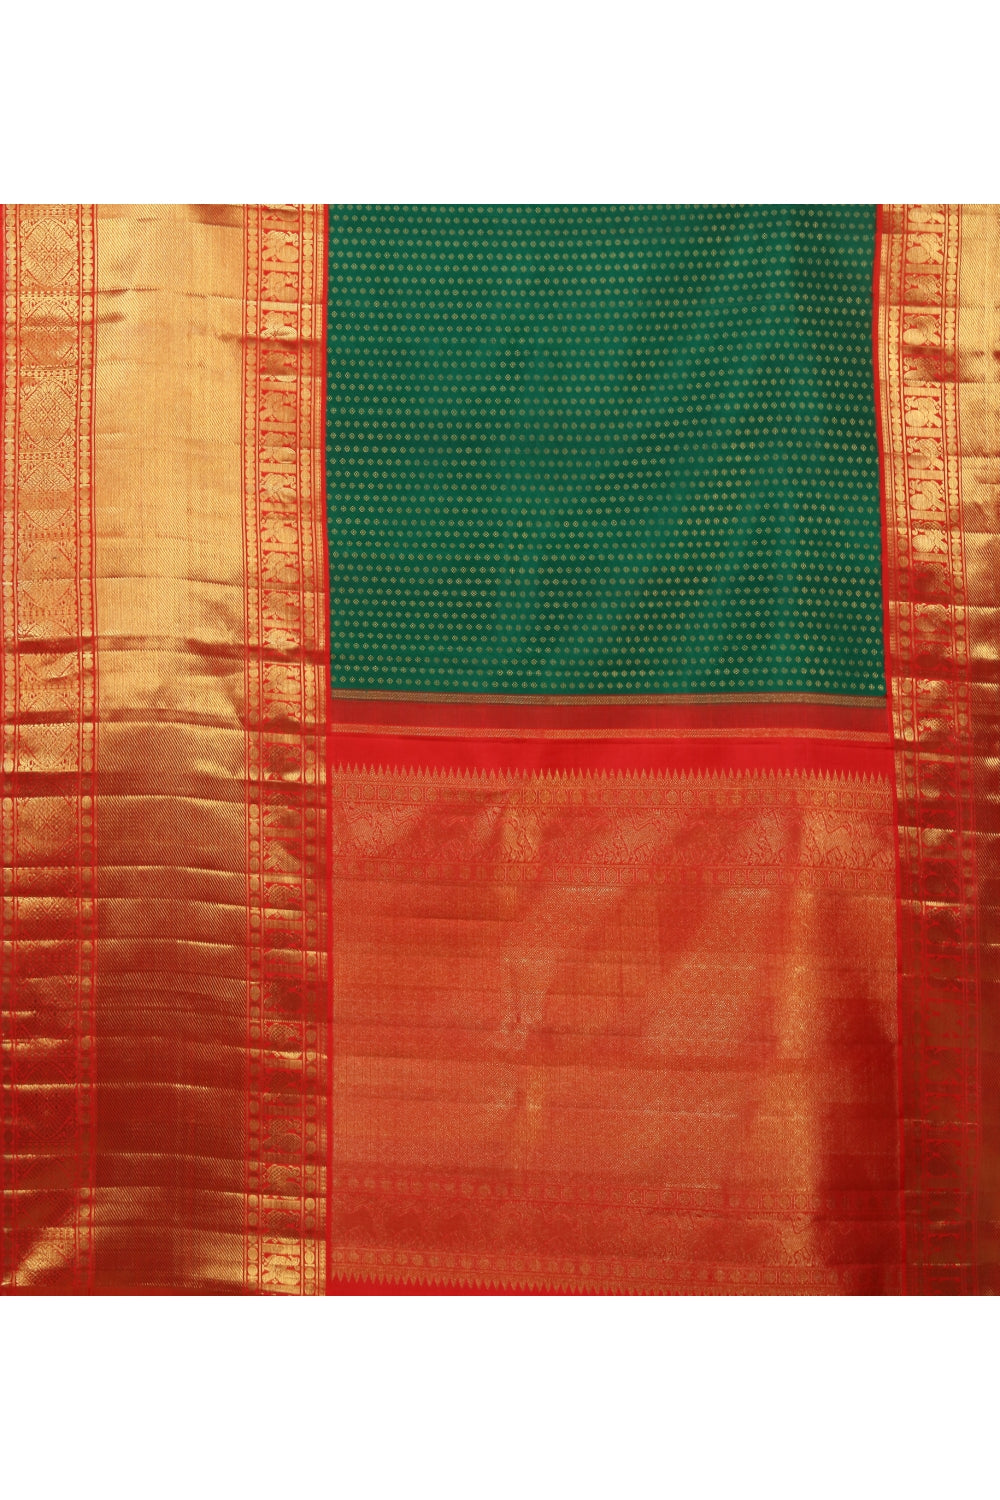 Emerald Green & Real Jari Golden Silk Kanjeevaram Saree Devam